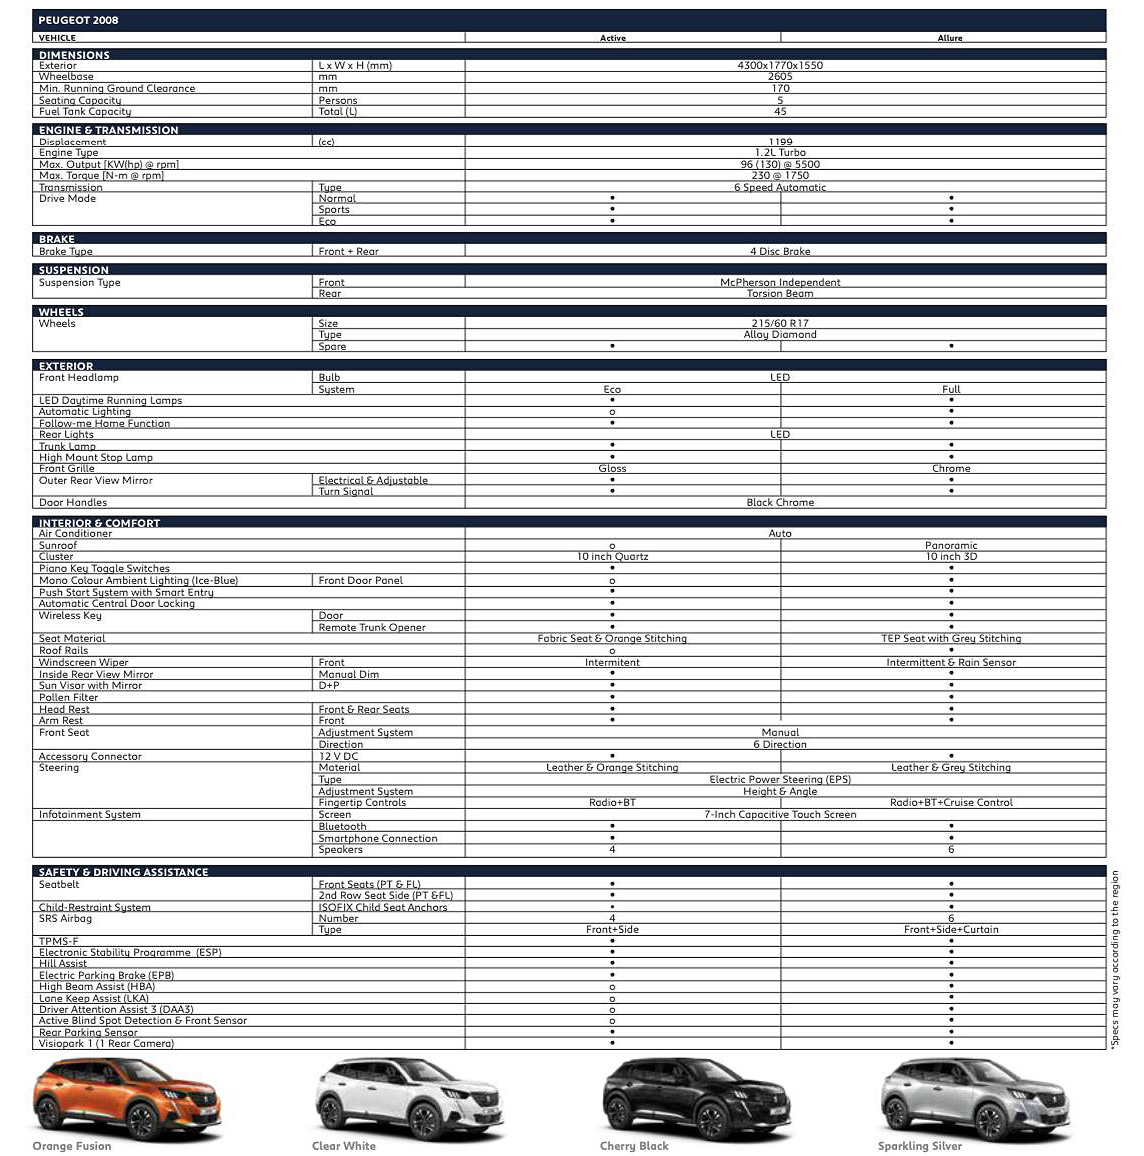 Peugeot 2008 specs